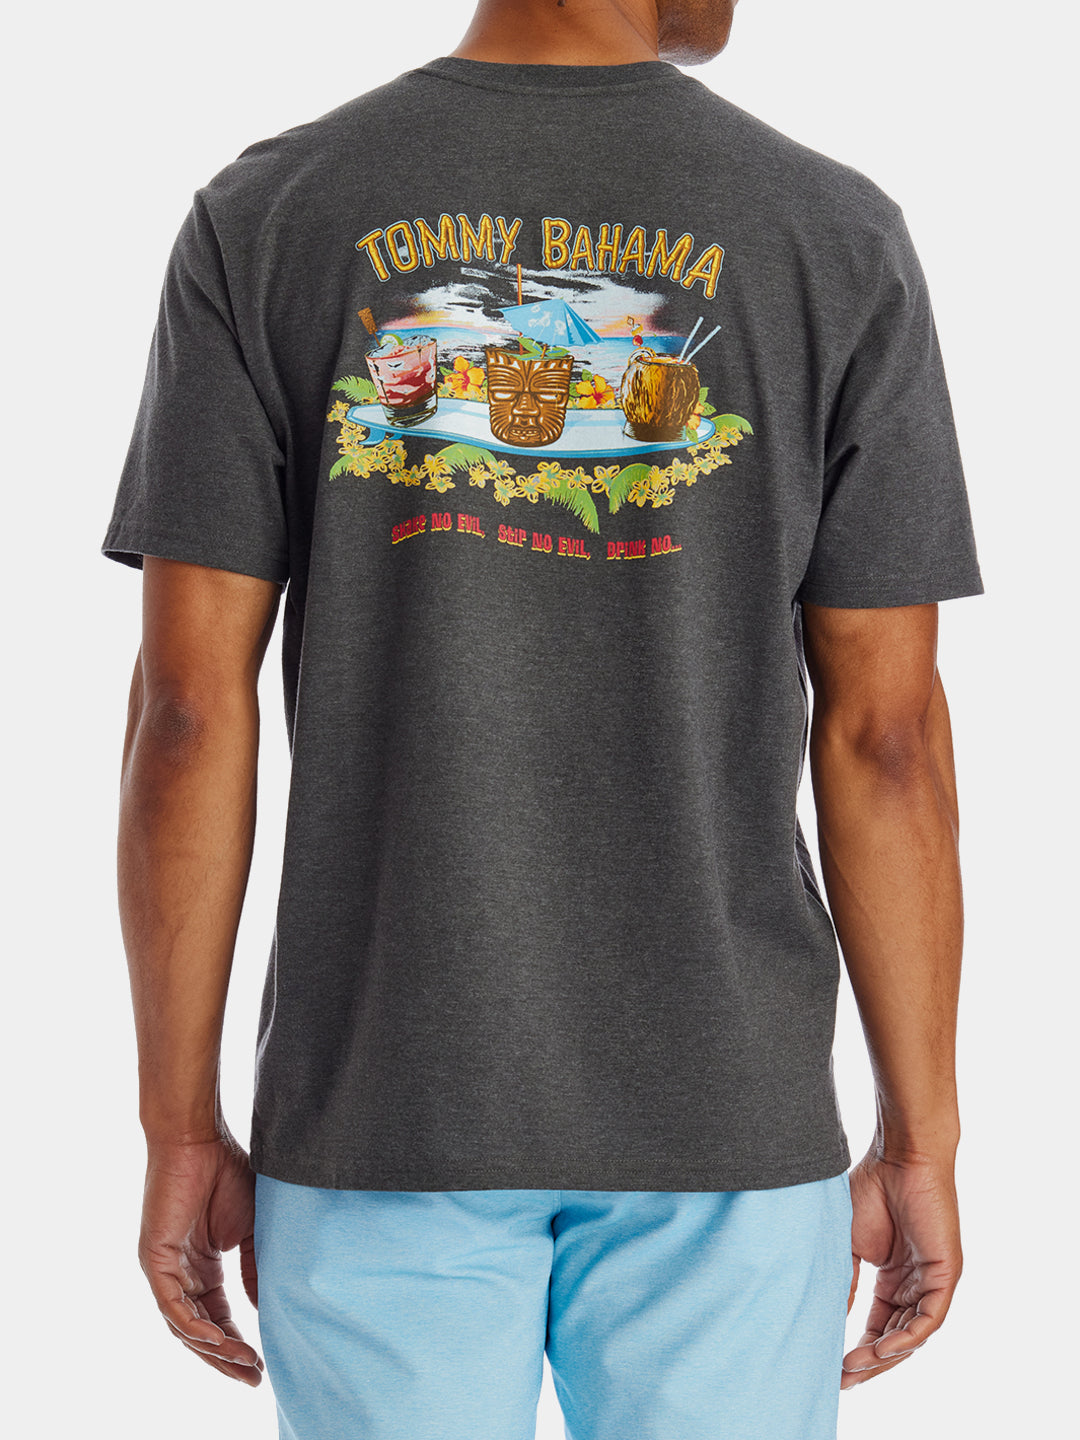 Tommy Bahama White Washington Nationals Island League T-shirt for Men